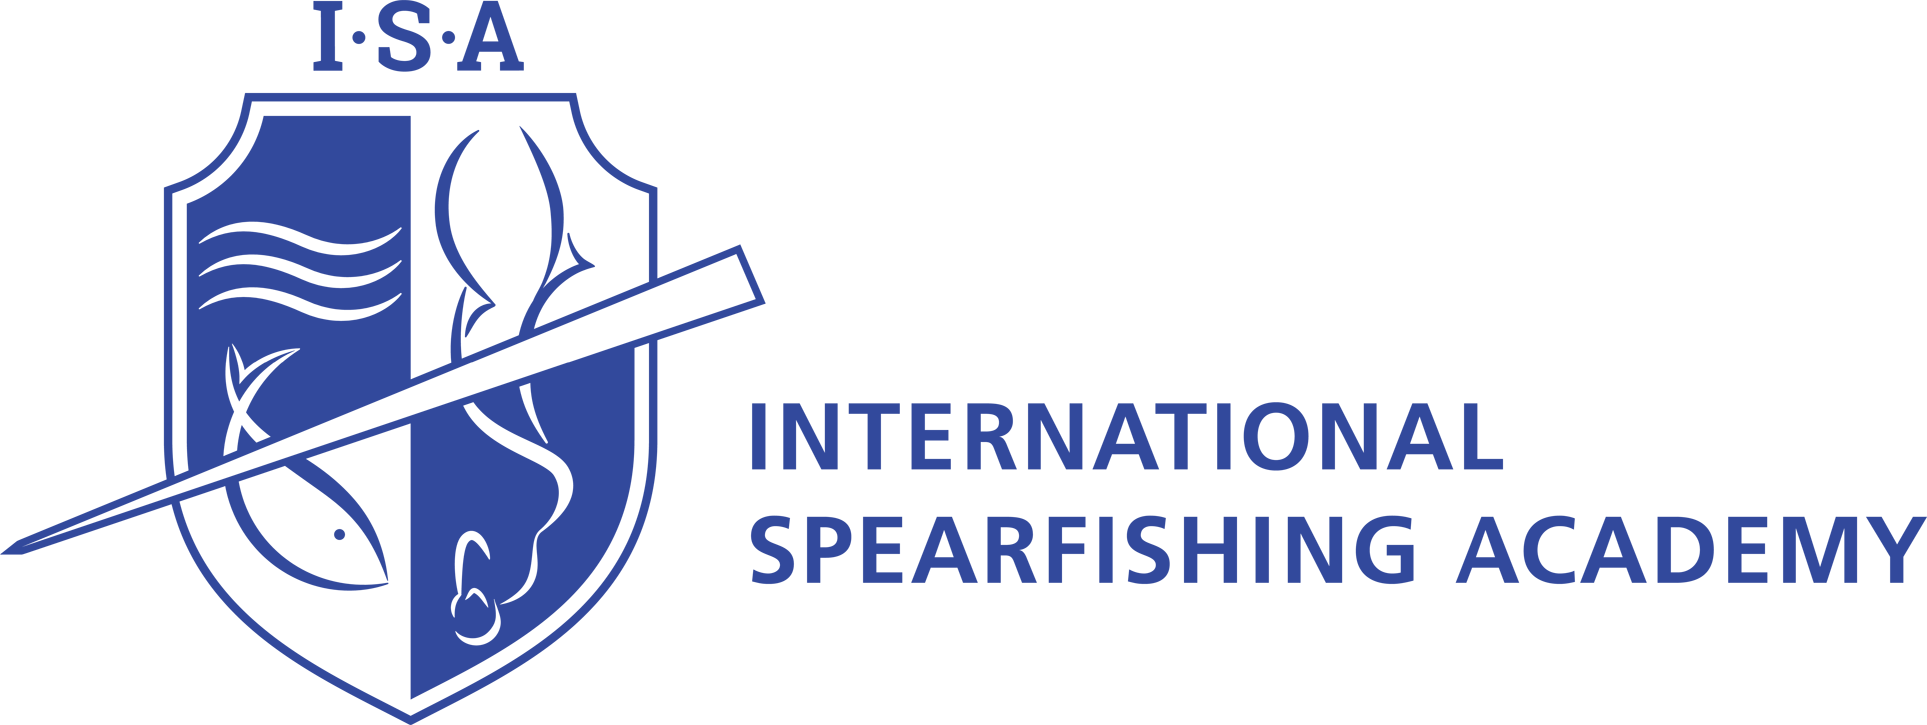 Spearfishing Academy - Qatar